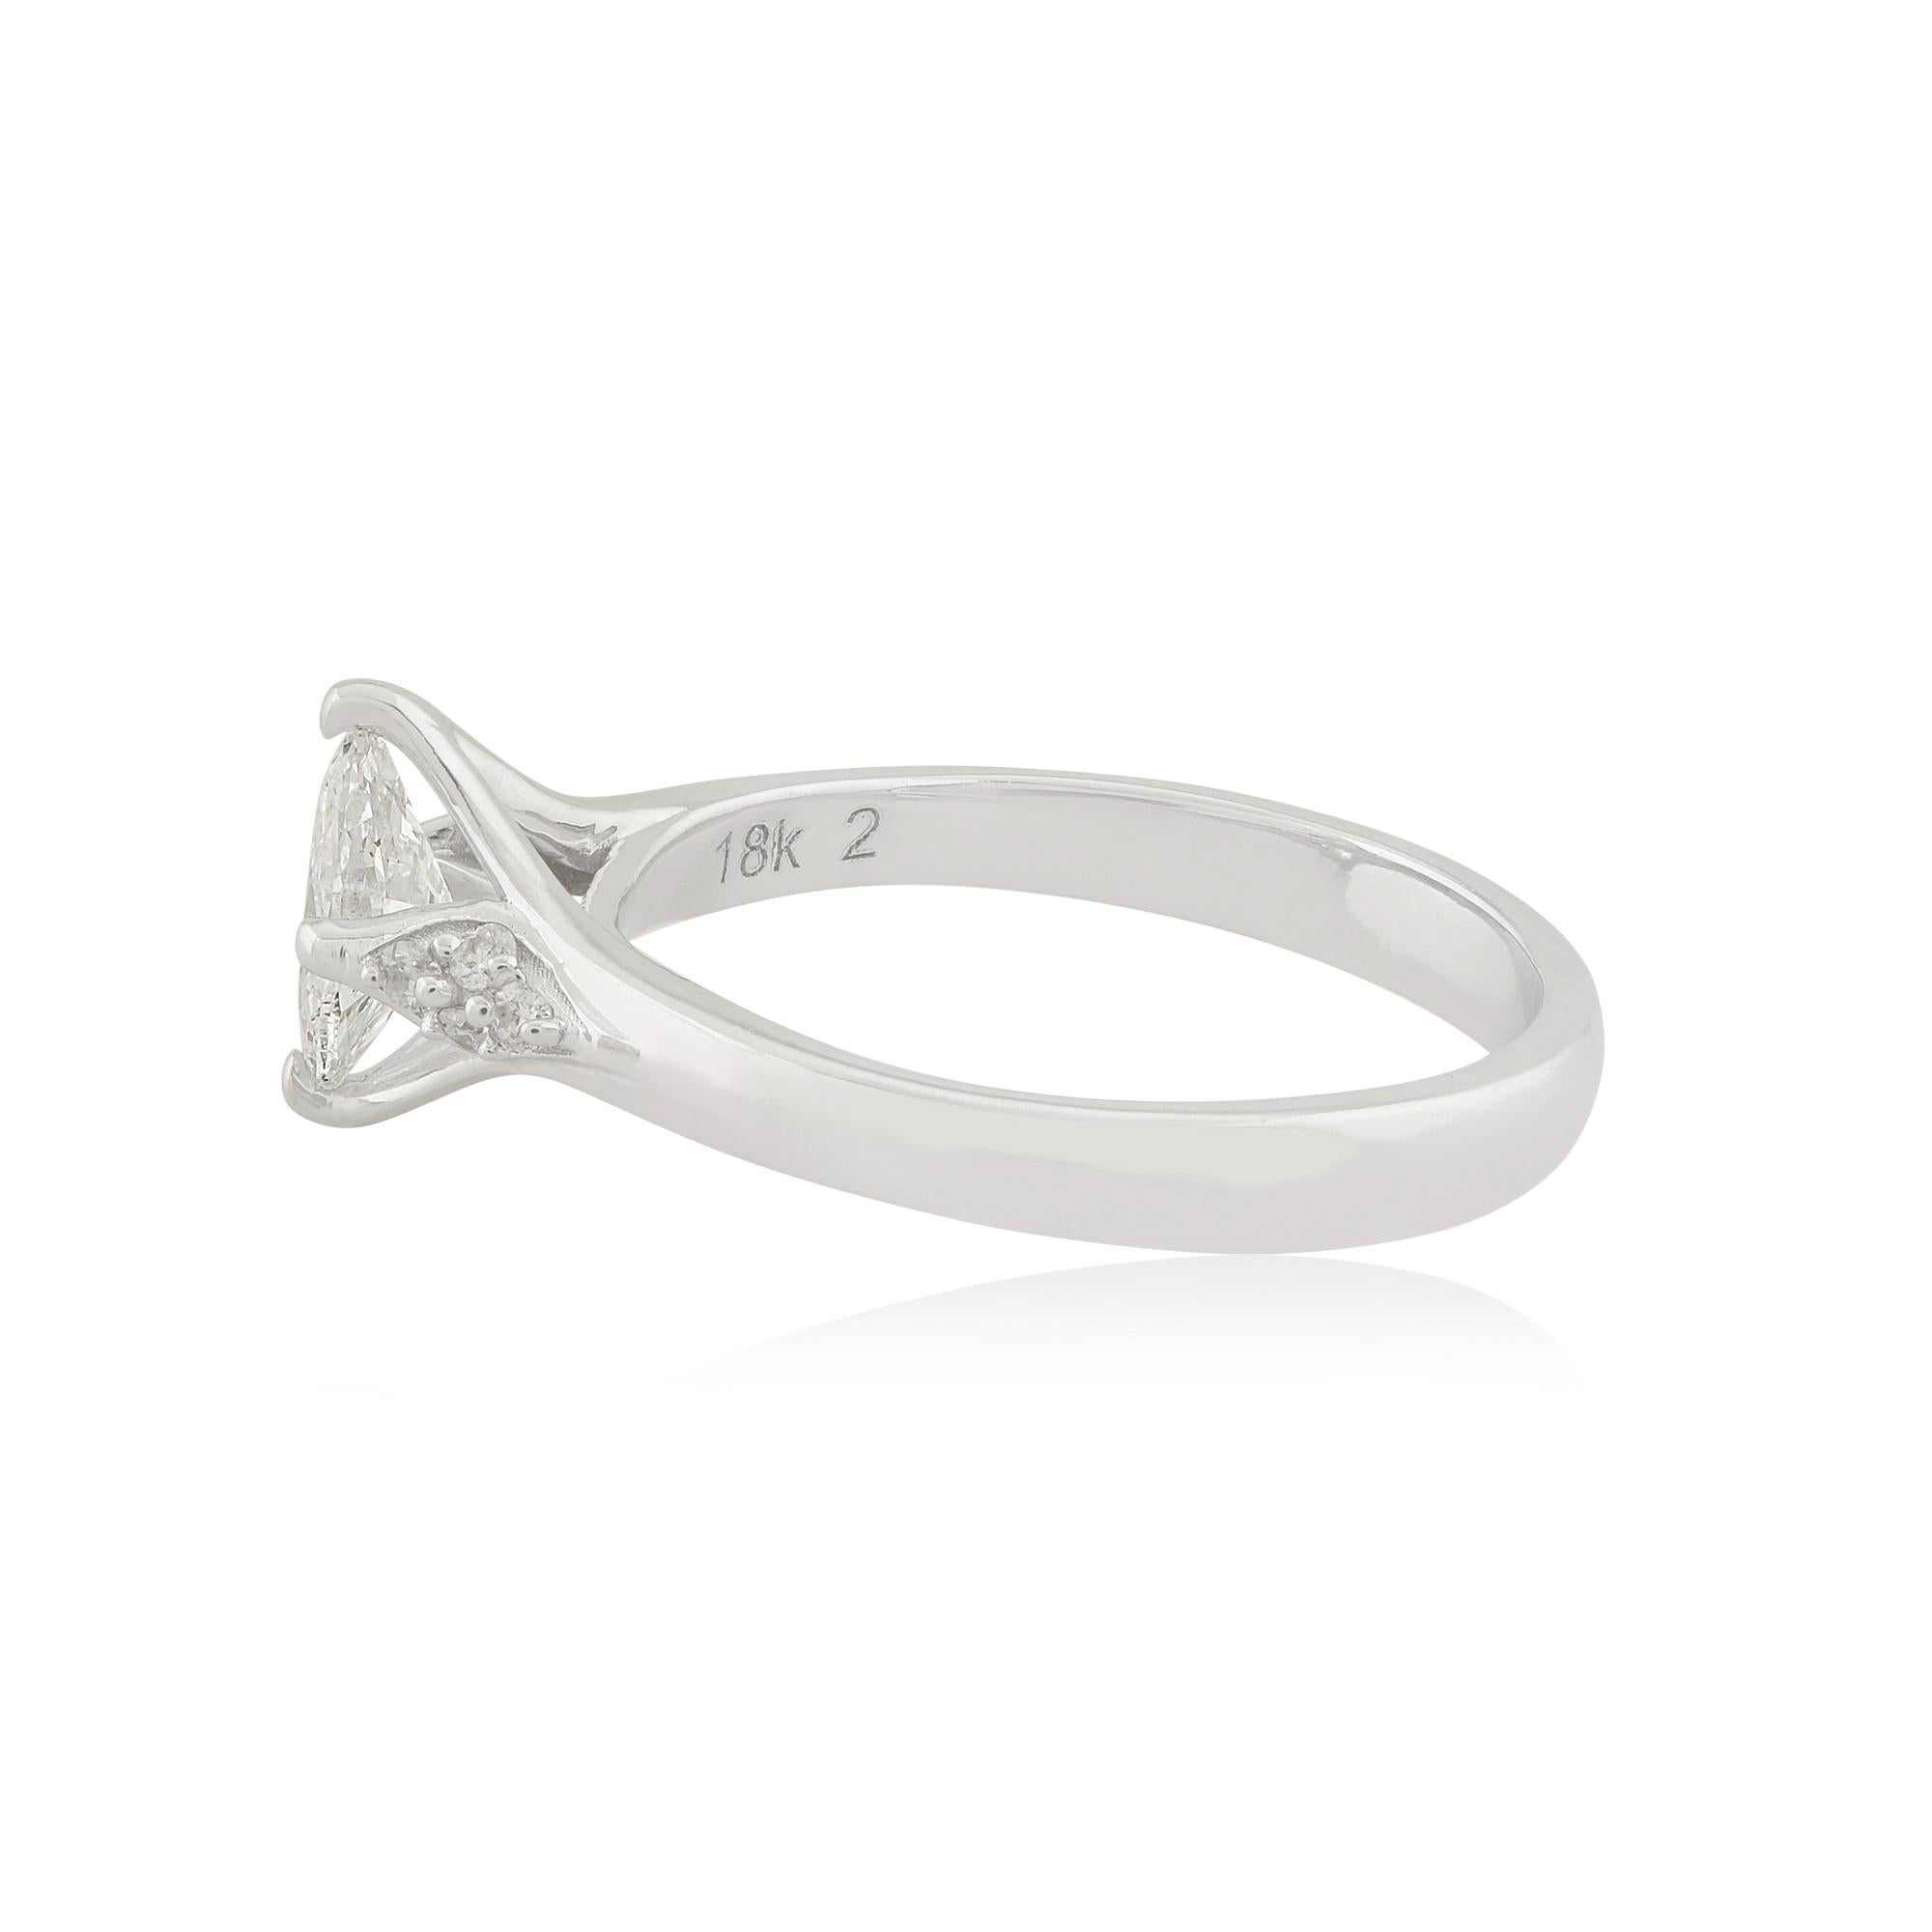 0.5 carat marquise diamond ring